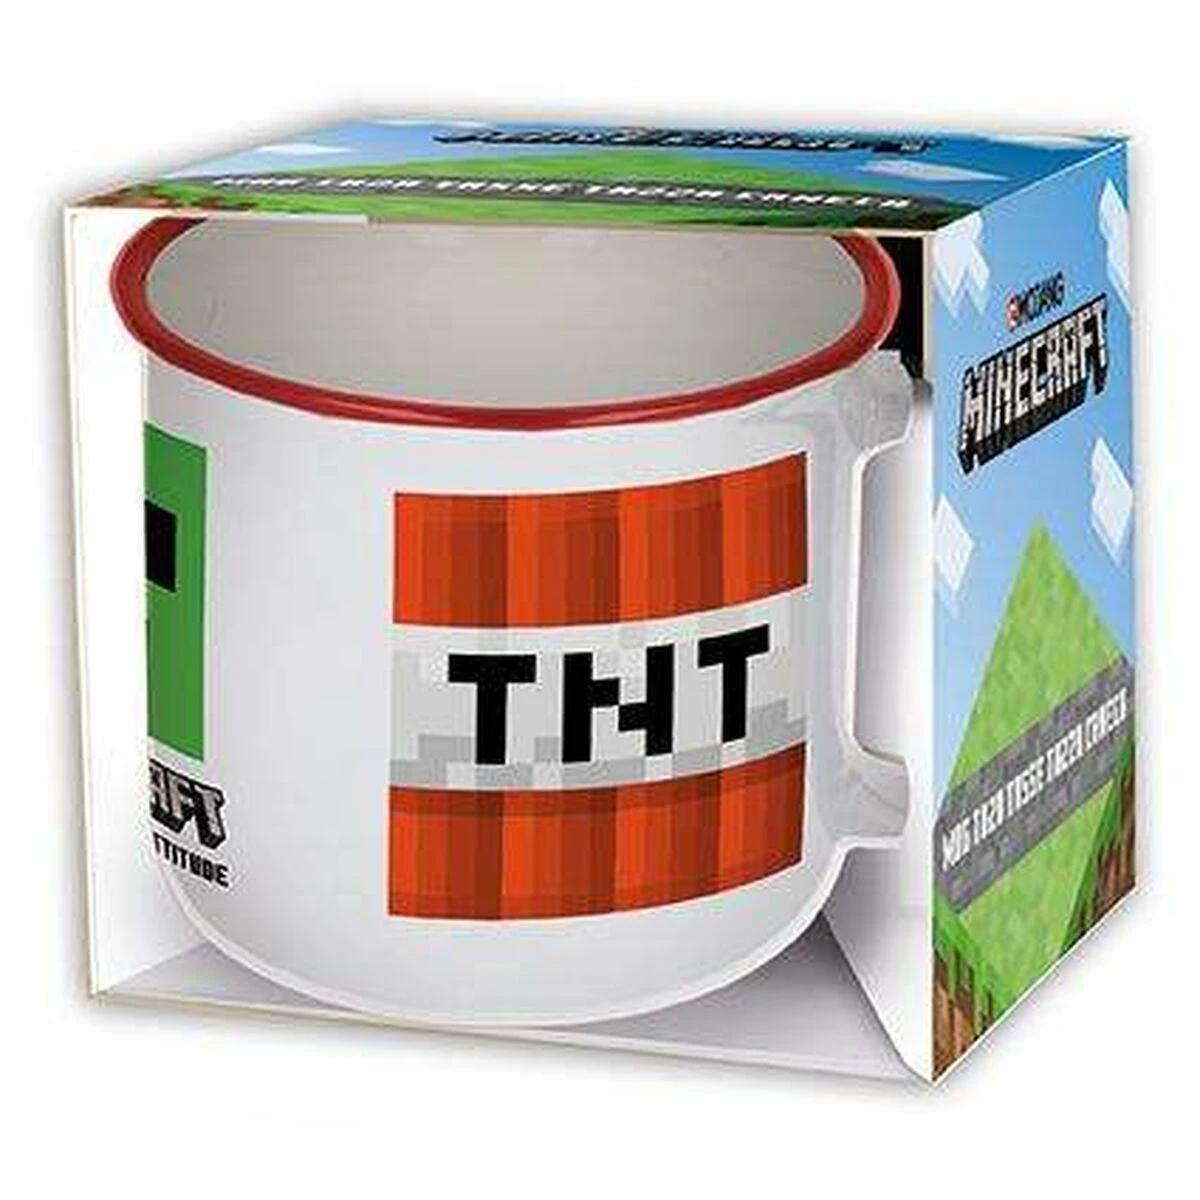 Minecraft TNT mug